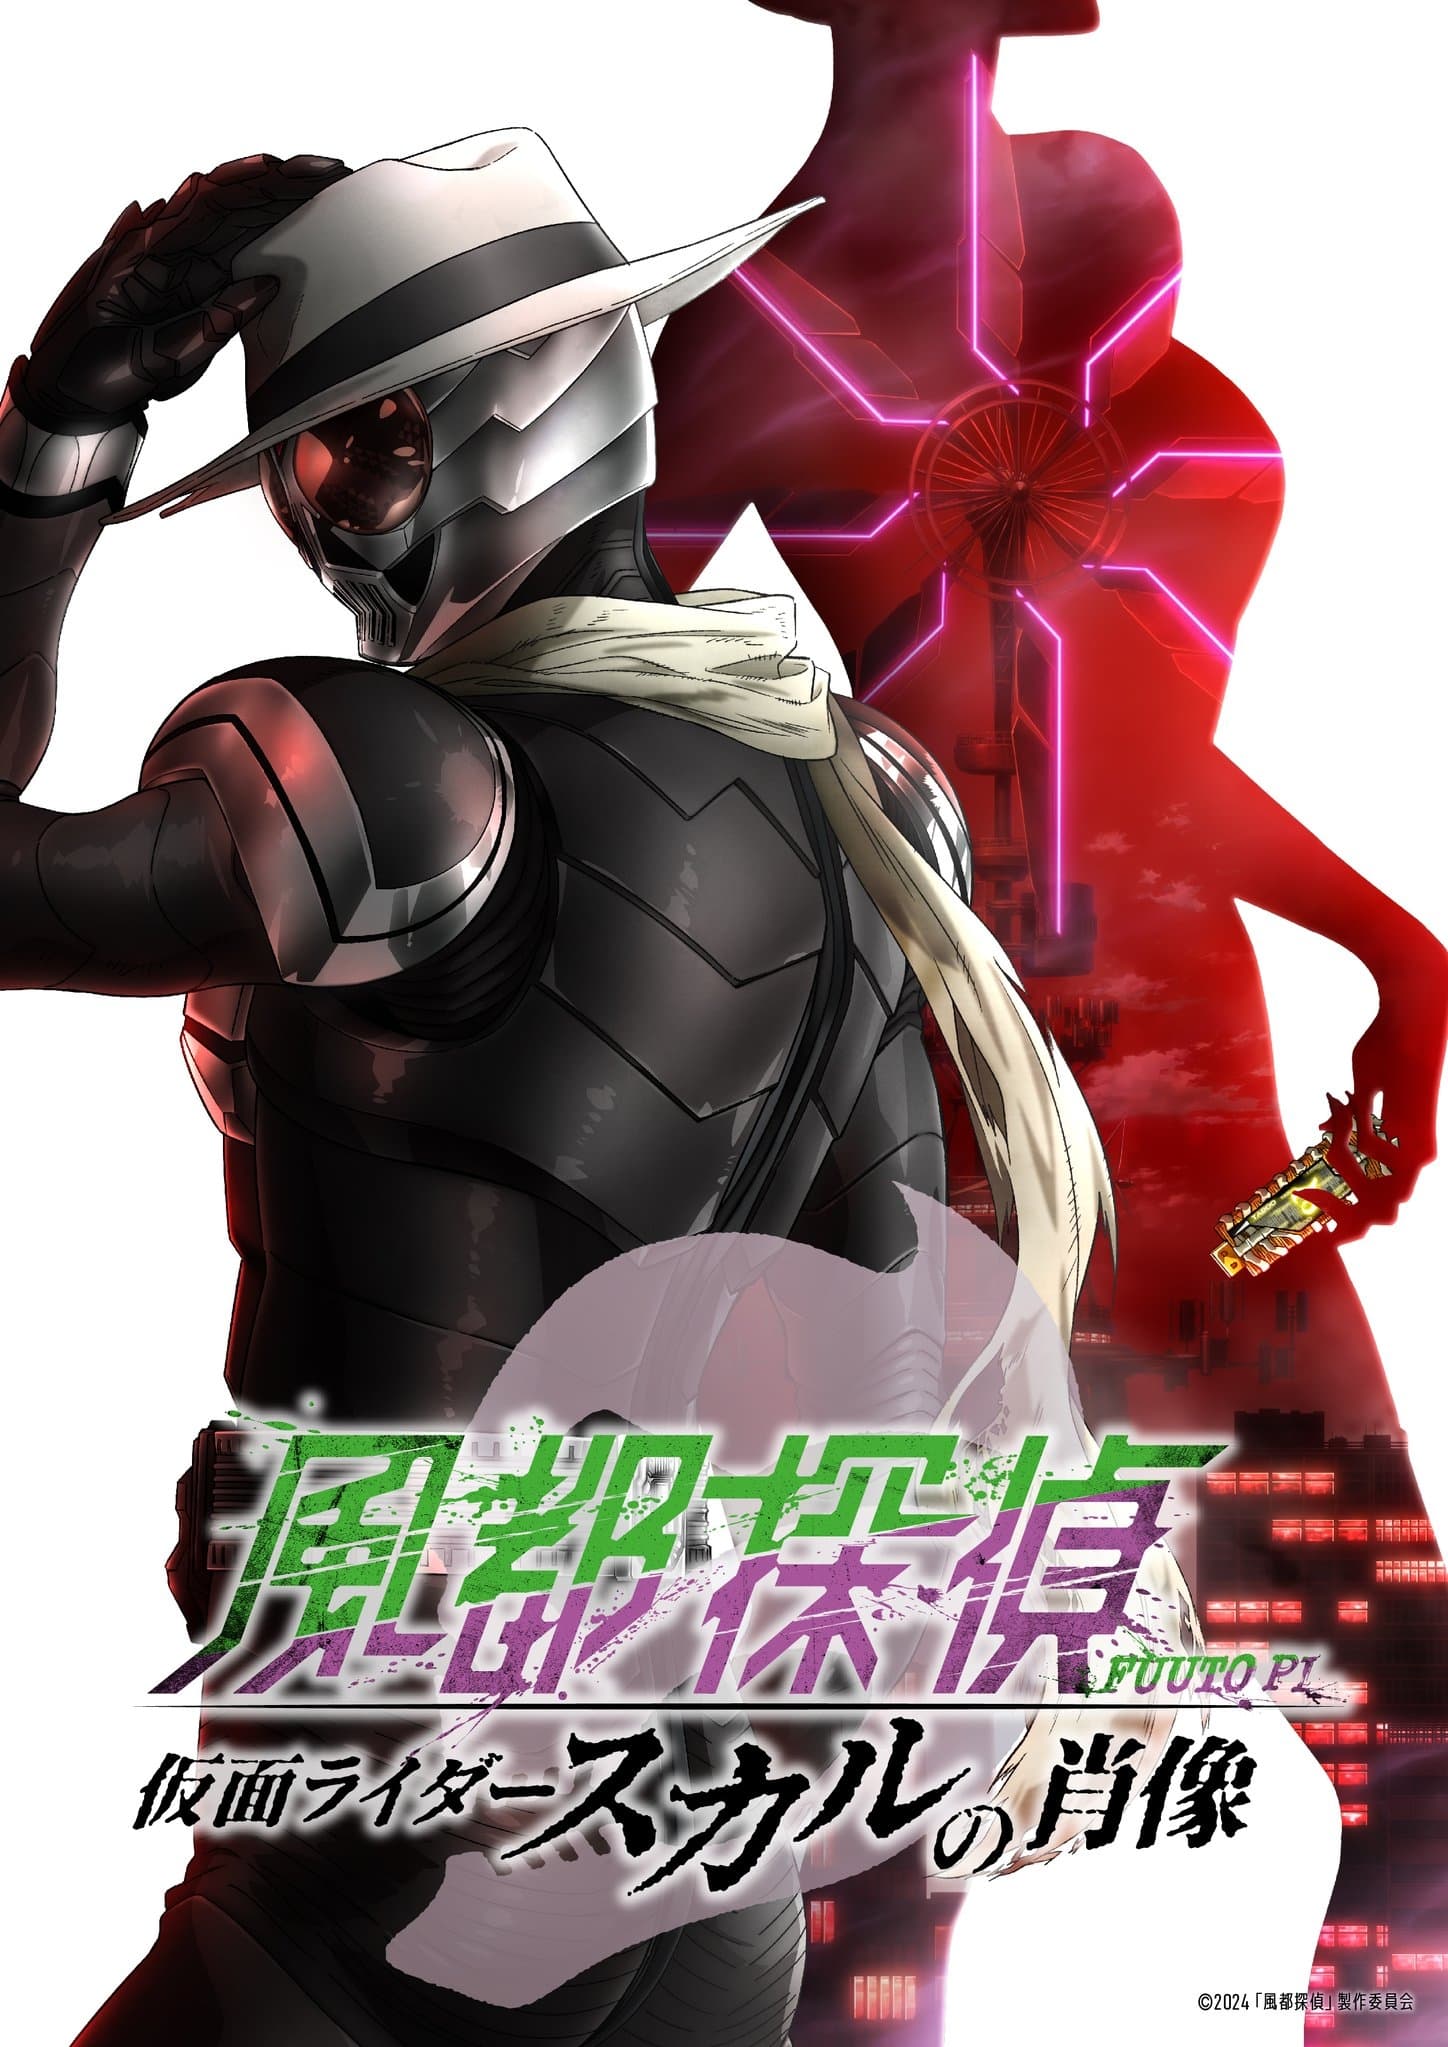 Fuuto PI: The Portrait of Kamen Rider Skull